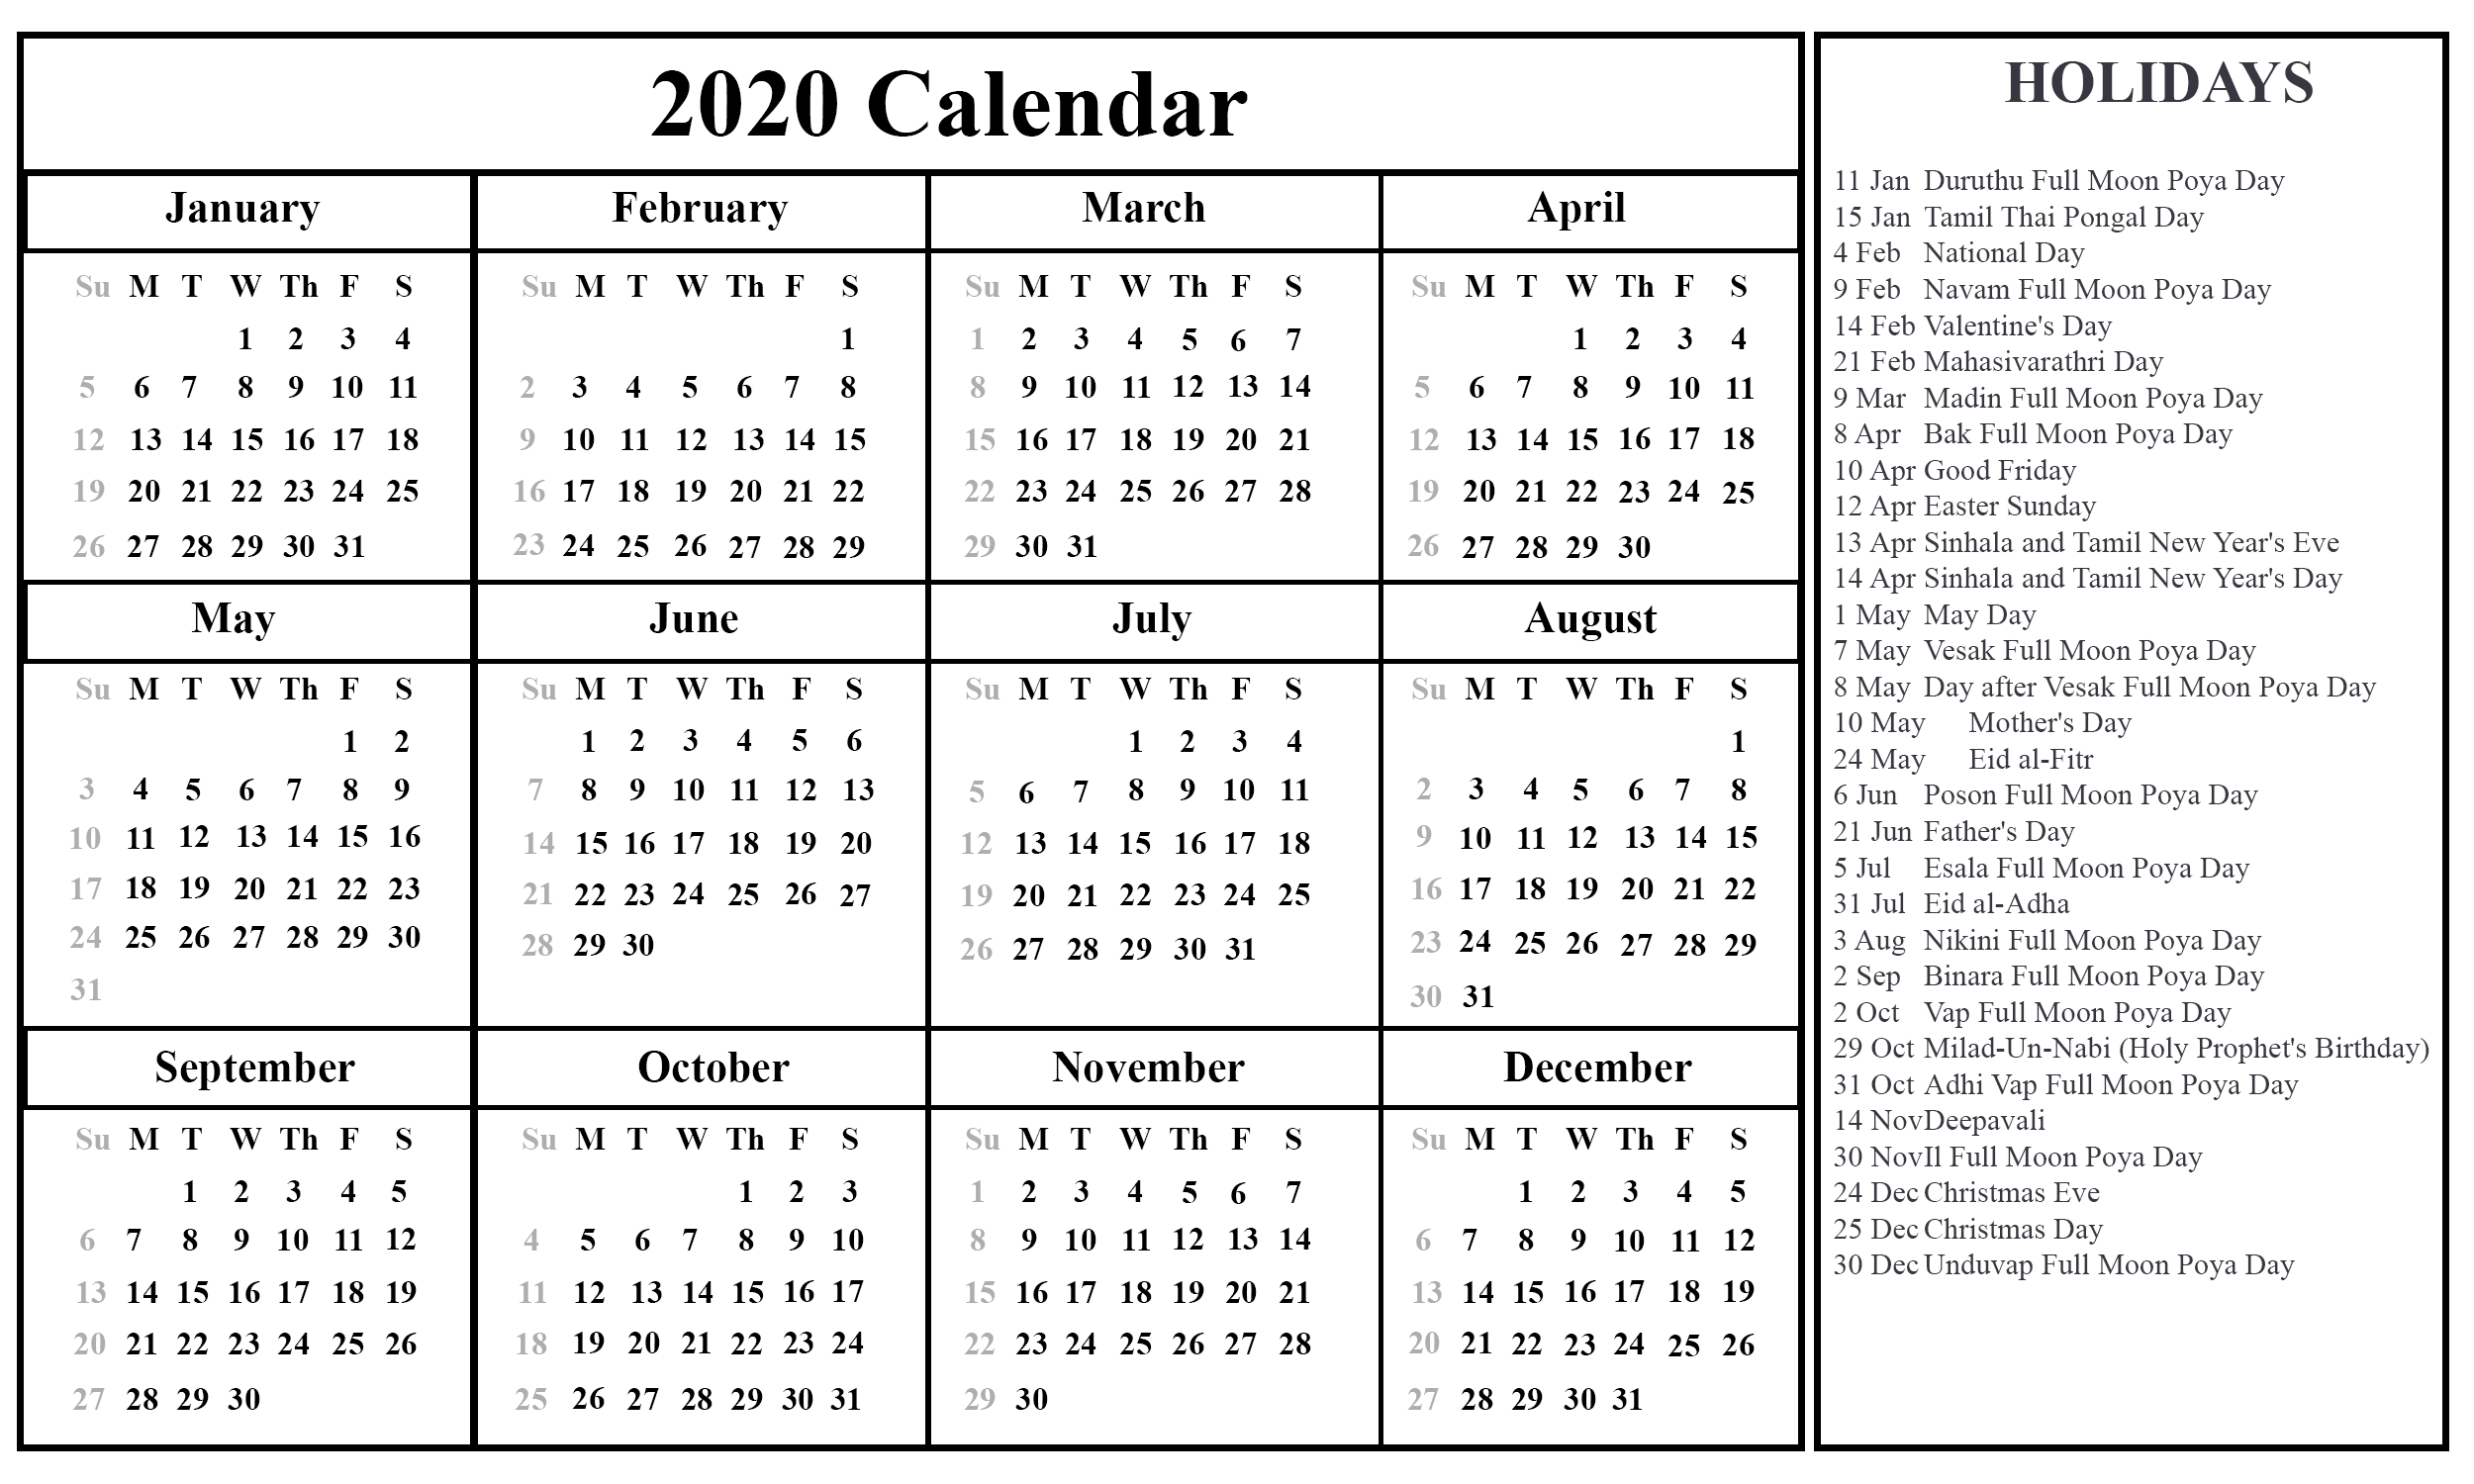 Free Printable Sri Lanka Calendar 2020 With Holidays In Pdf-Mercantile Holidays In 2020 Sri Lanka